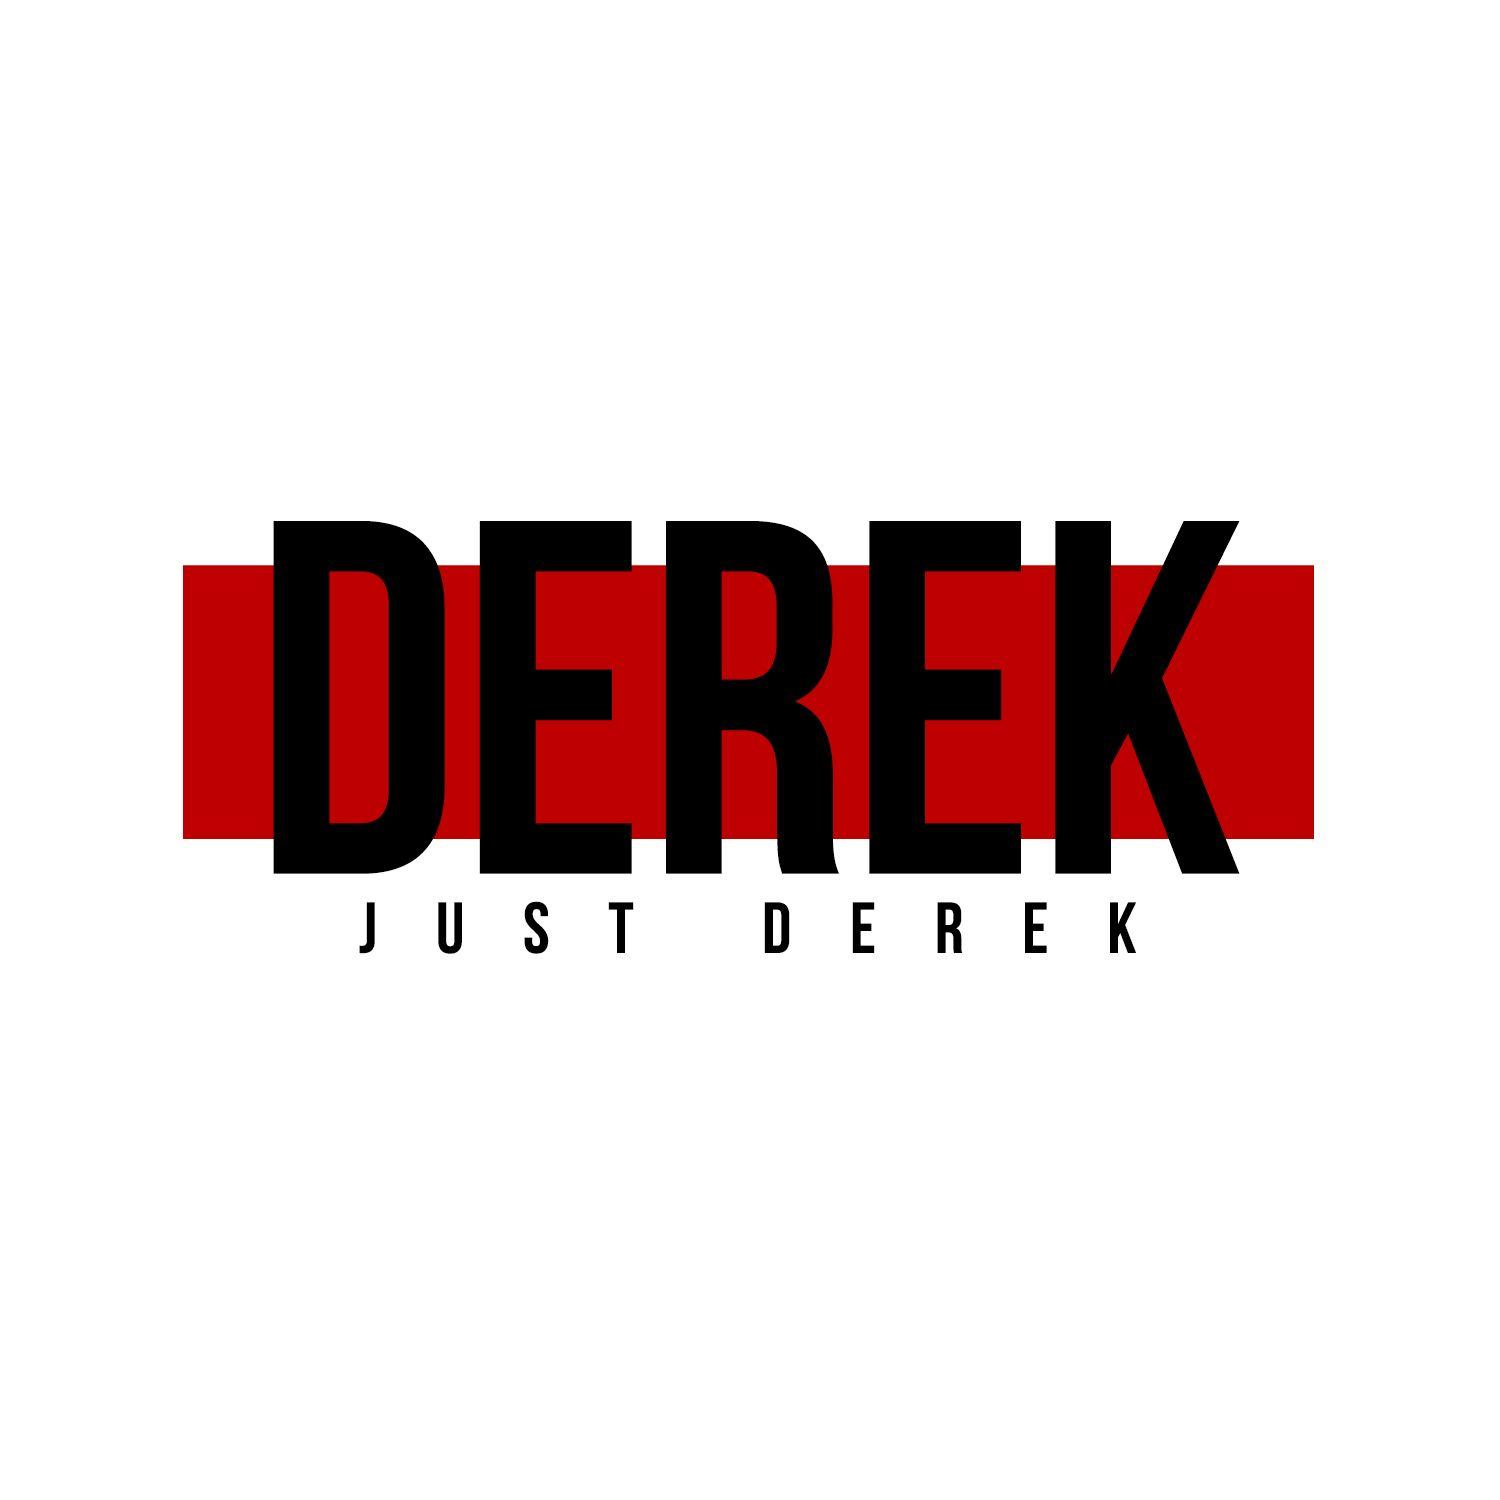 Derek Logo - Media — Just Derek